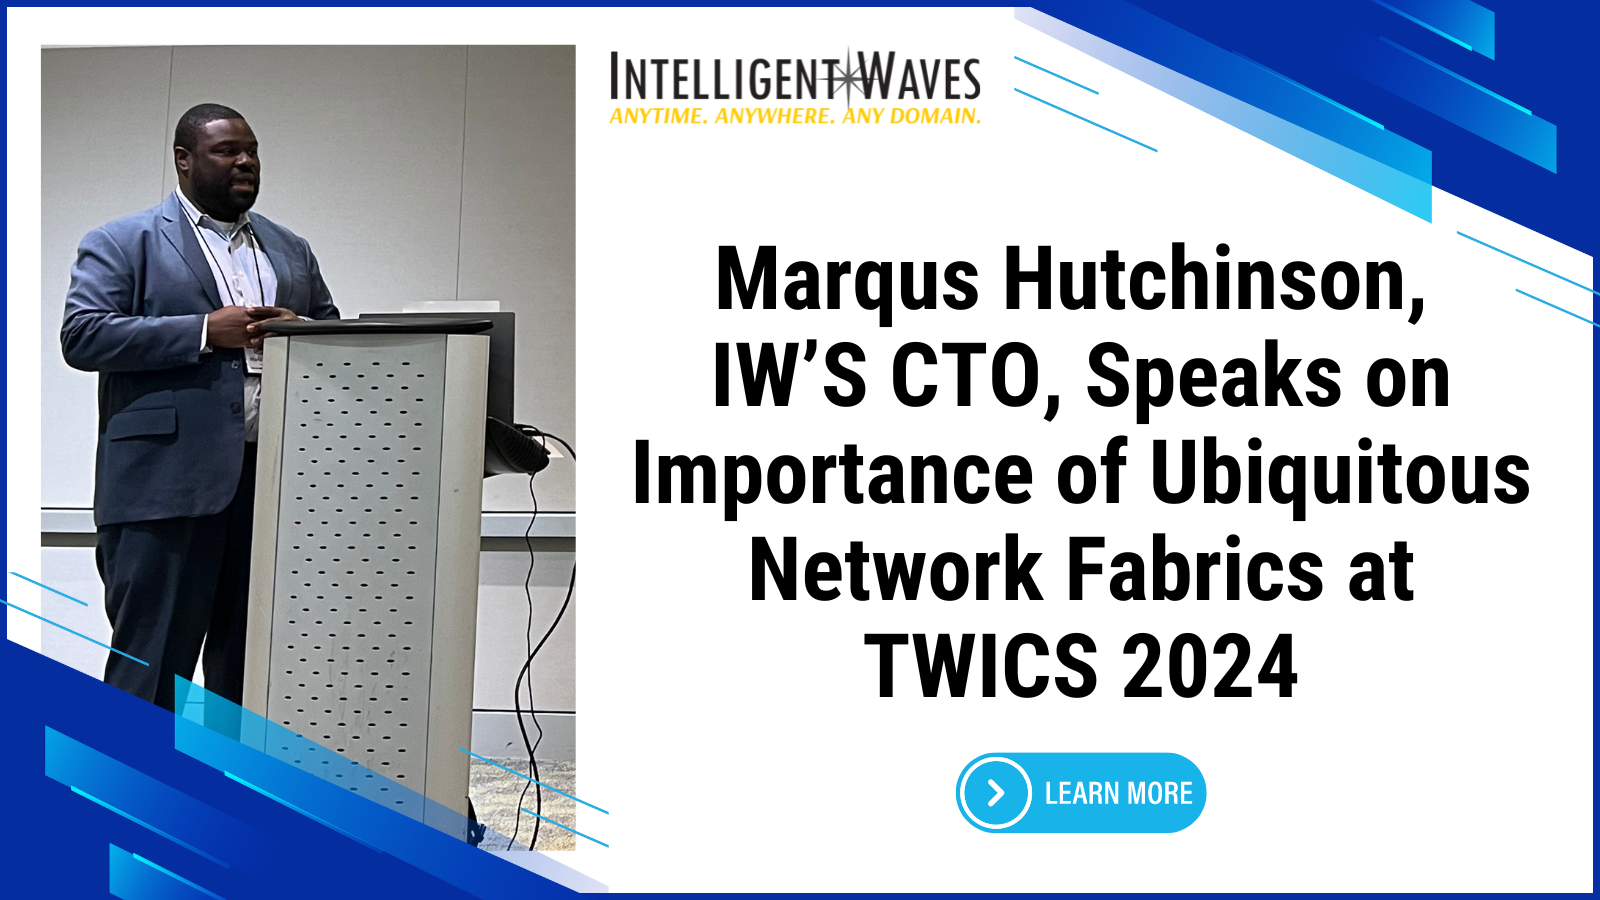 Ubiquitous Network Fabrics - Marqus Hutchinson Speech at 2024 TWICS